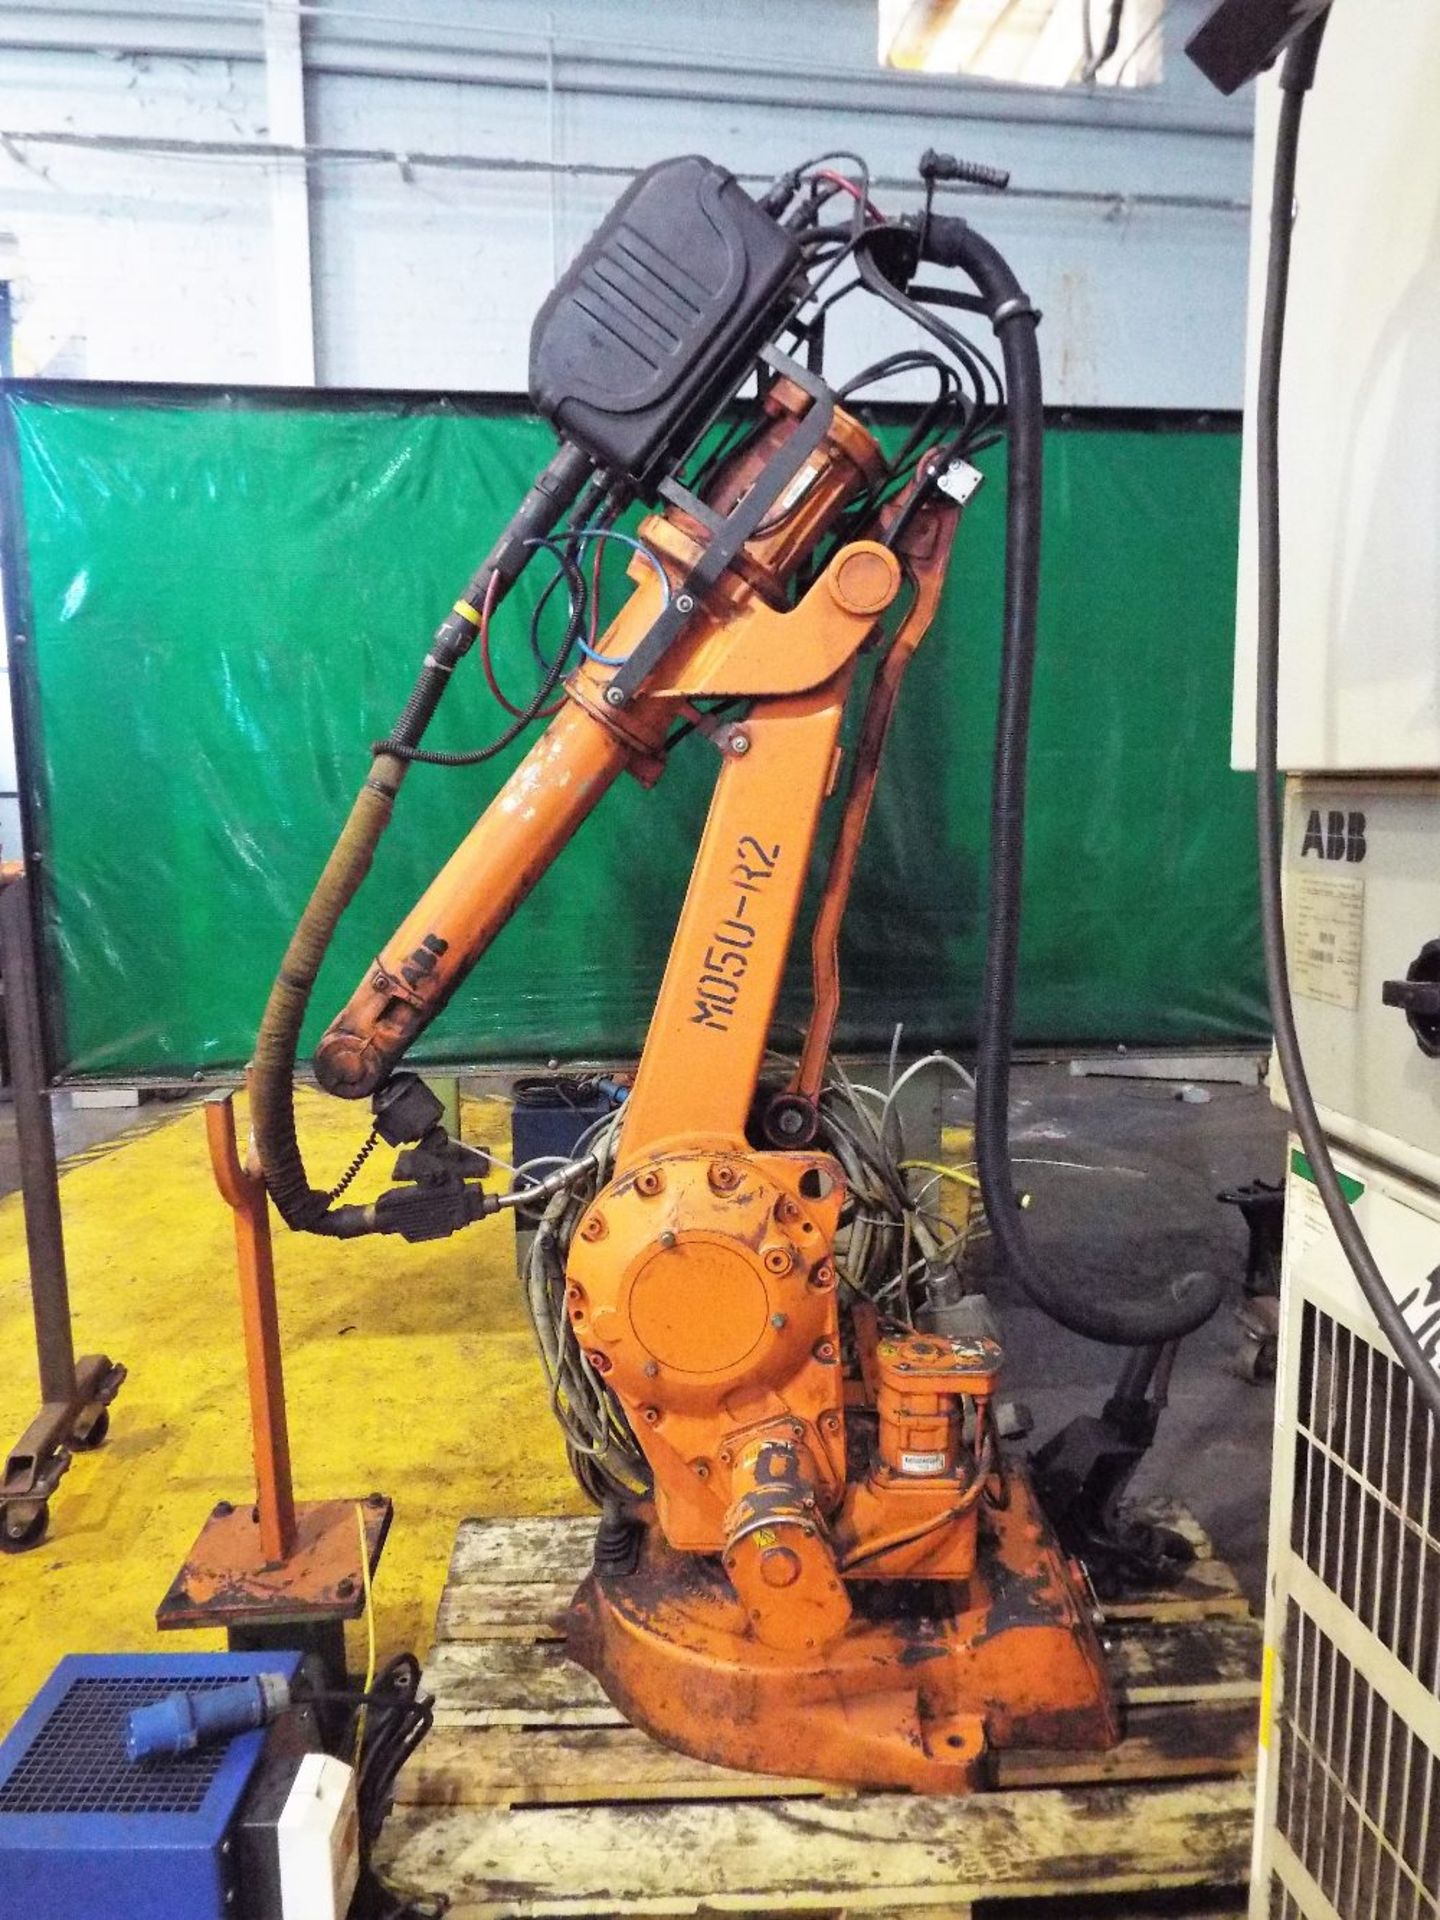 ABB 2400L Mig Welding Robot - Image 3 of 16